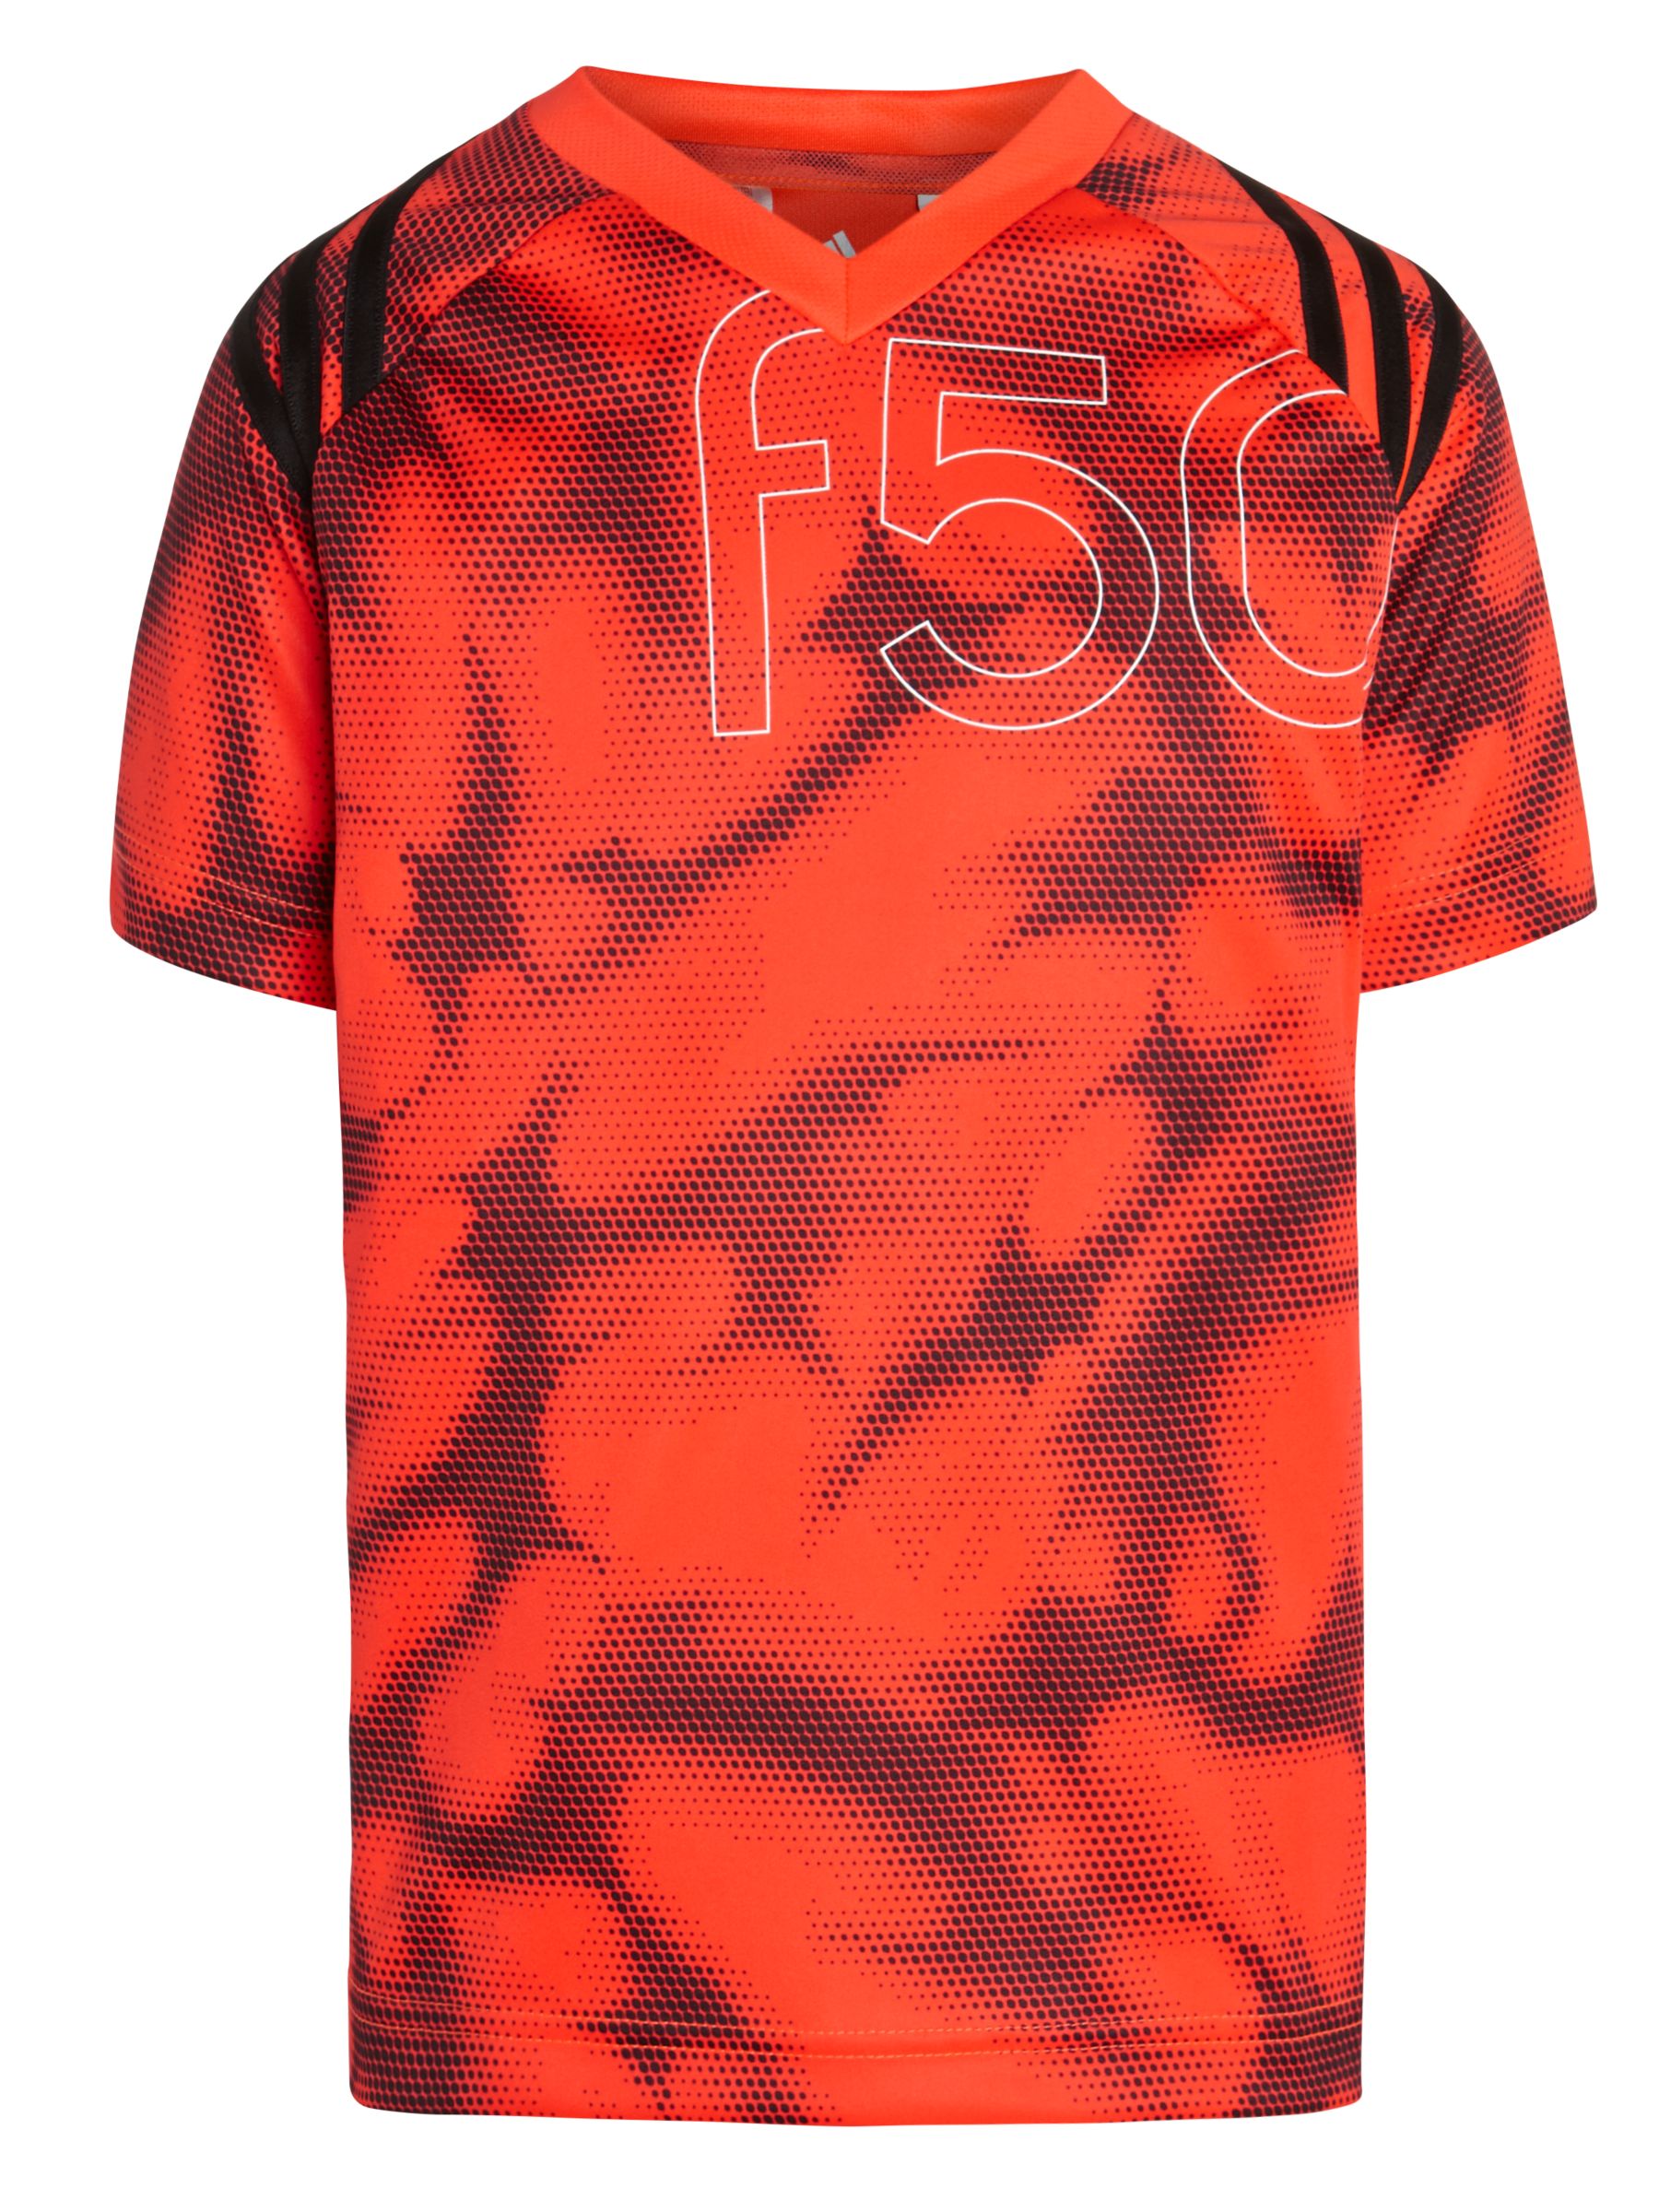 adidas f50 t shirt orange